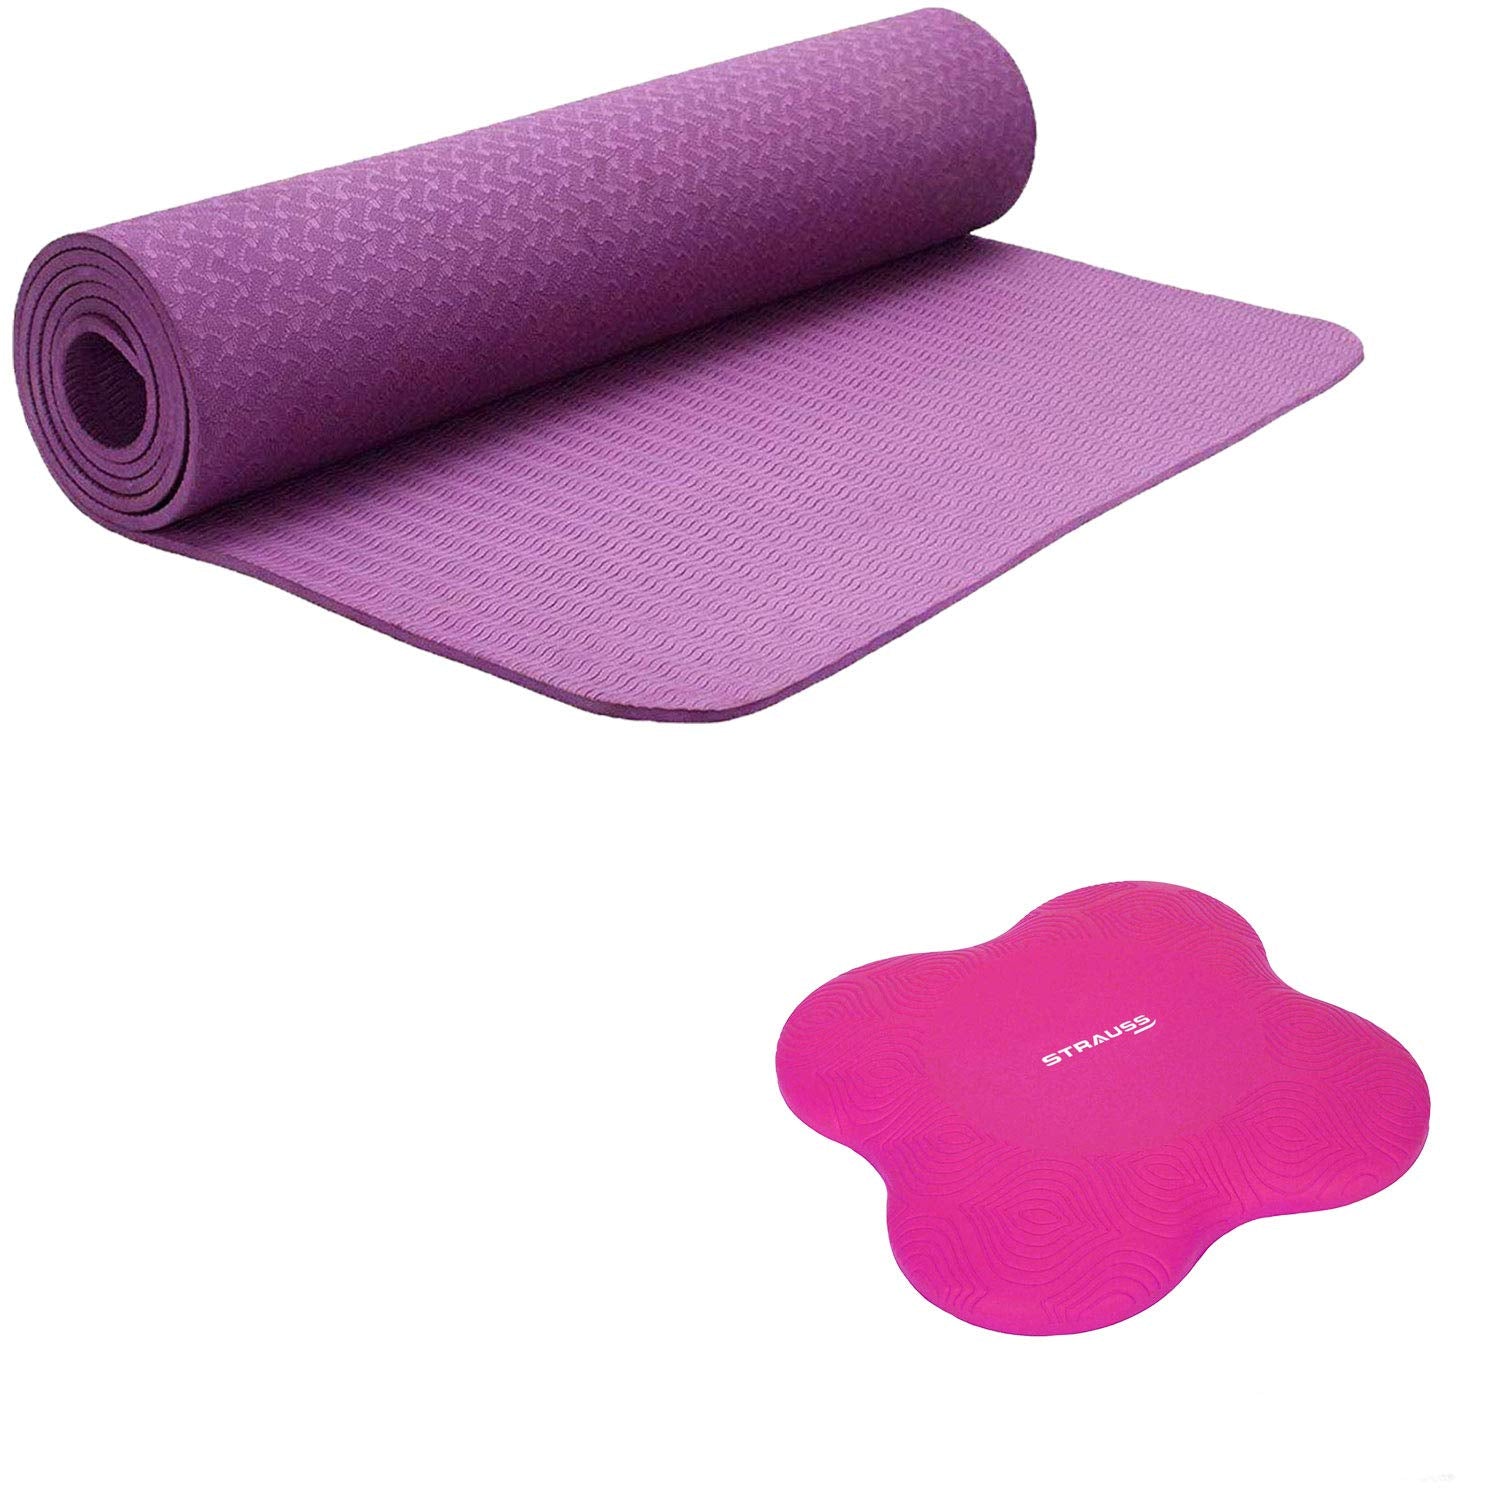 Strauss TPE Eco-Friendly Yoga Mat, 6mm (Purple) and Yoga Knee Pad Cushions, (Pink)